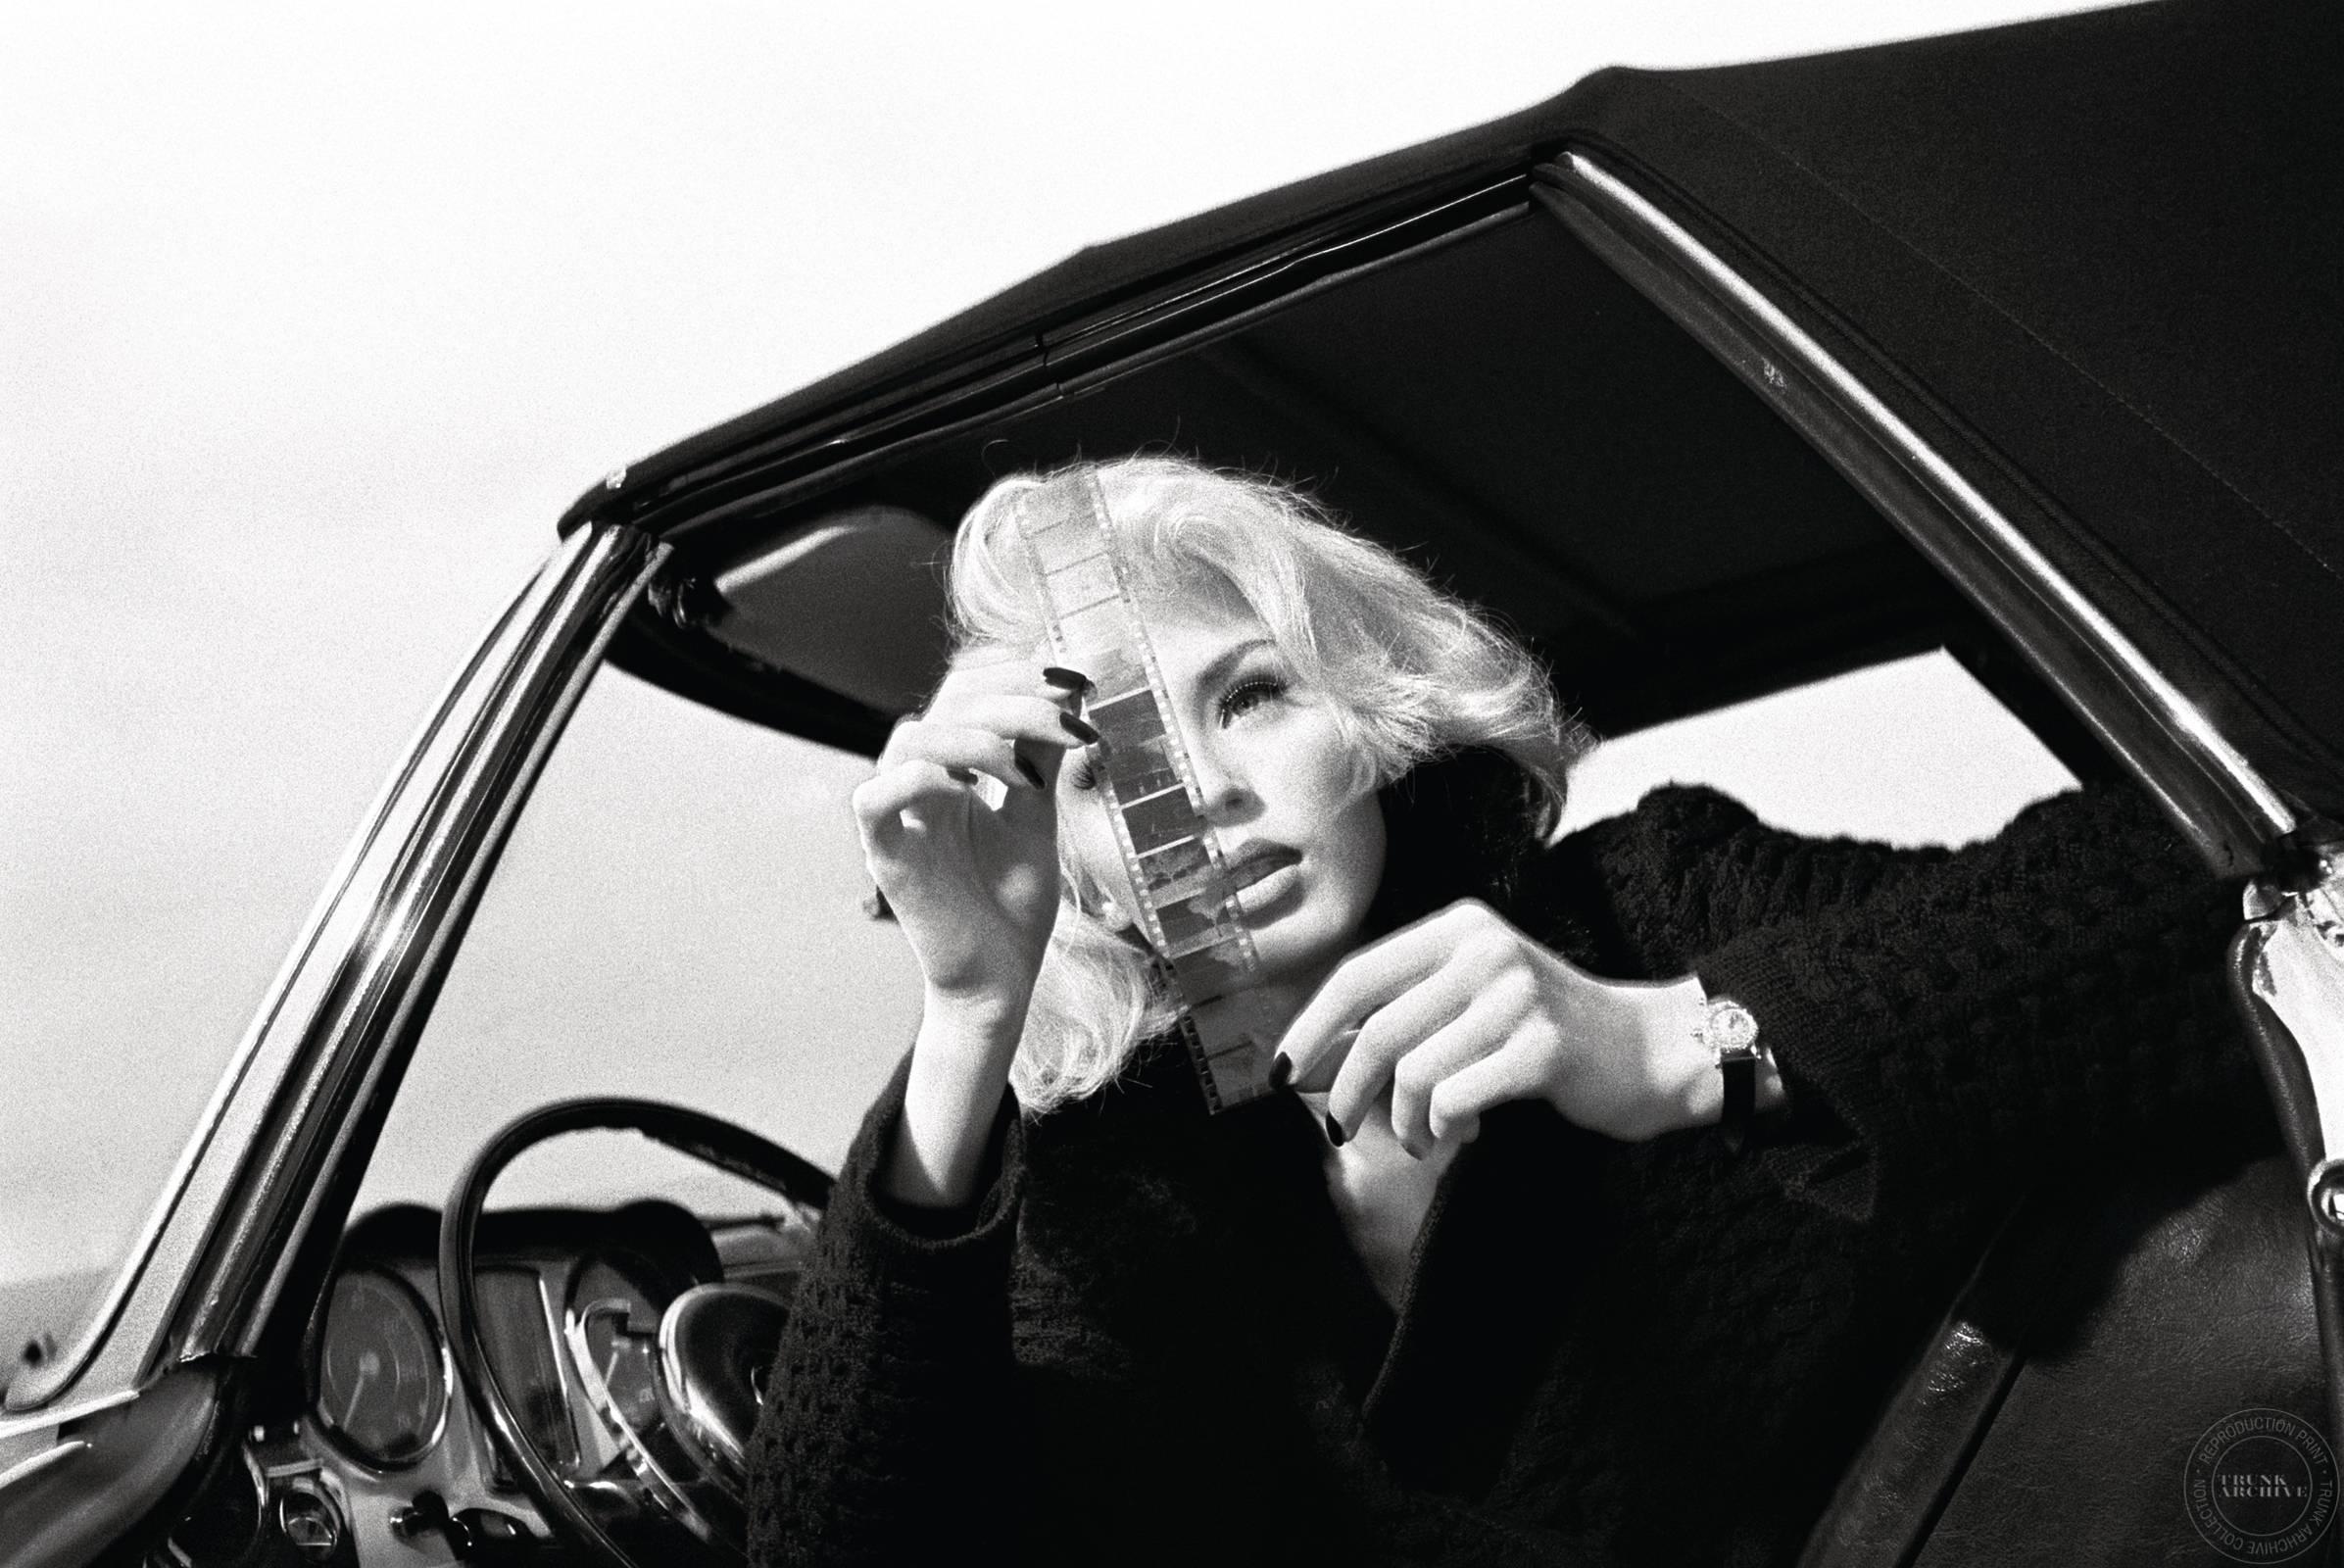 Steve Hiett Black and White Photograph - Portrait (Woman in Vintage Car)